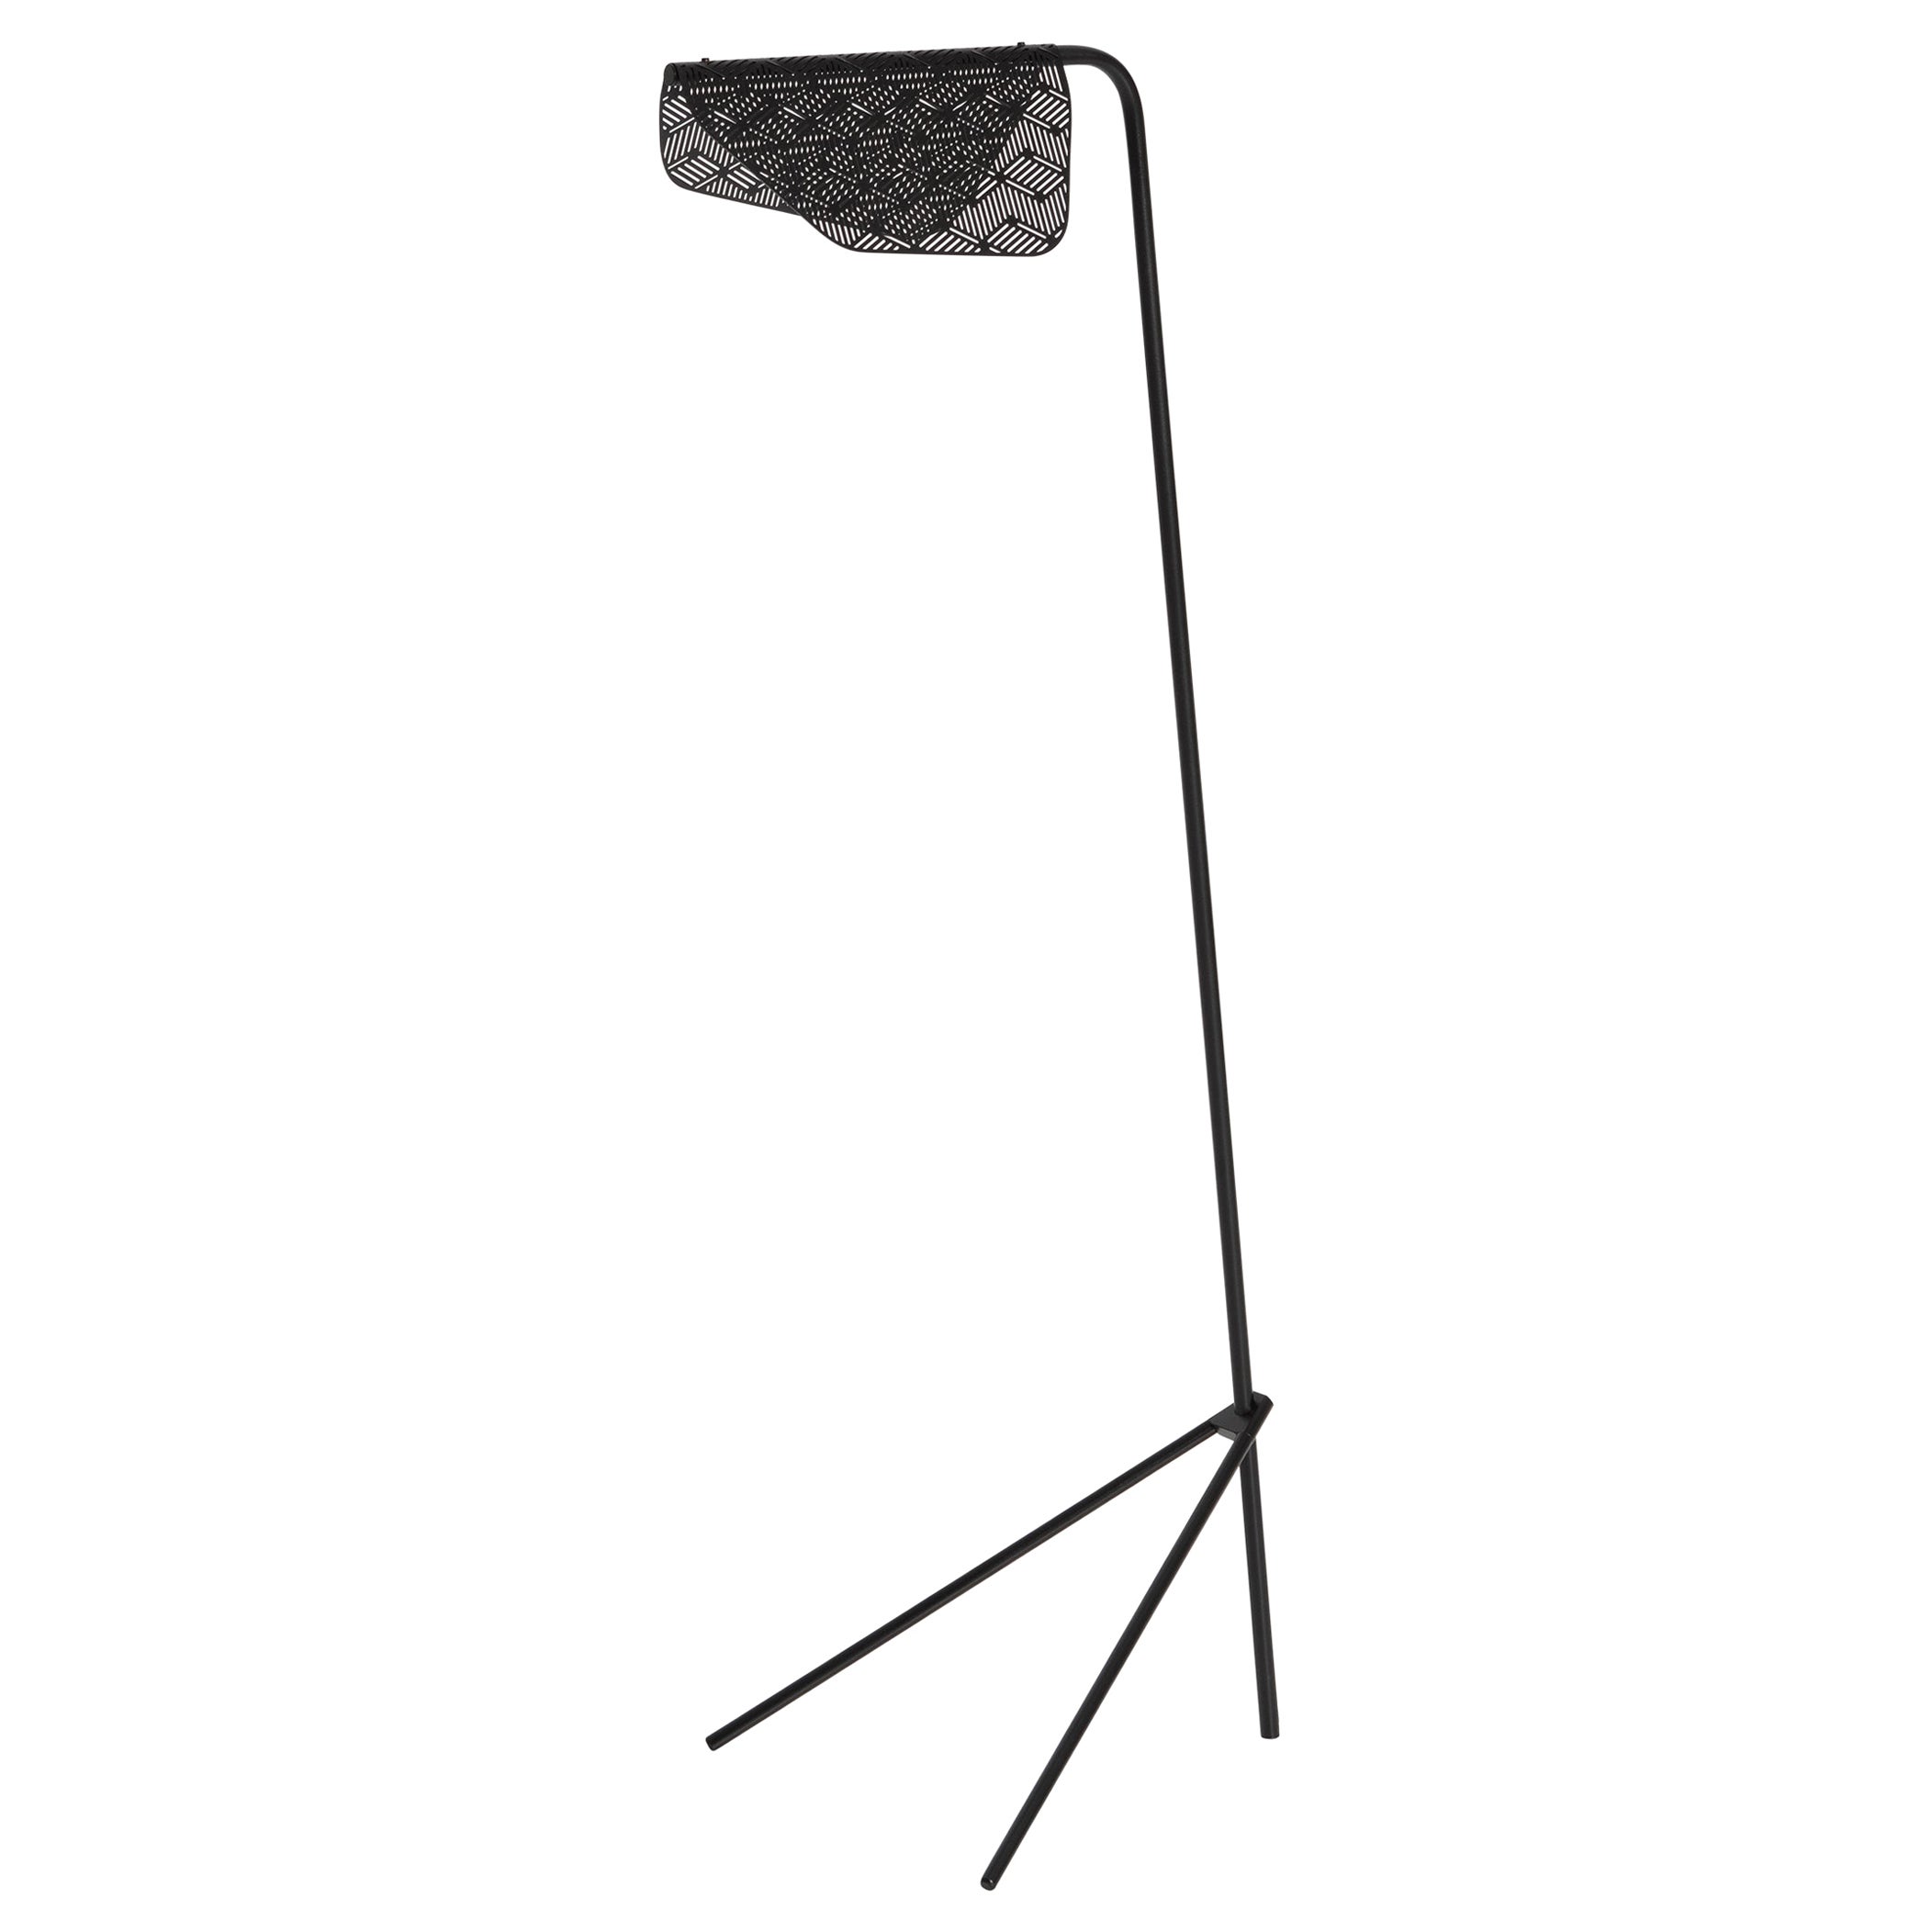 Petite Friture Mediterranea Floor Lamp in Black by Noé Duchaufour-Lawrance, 2016